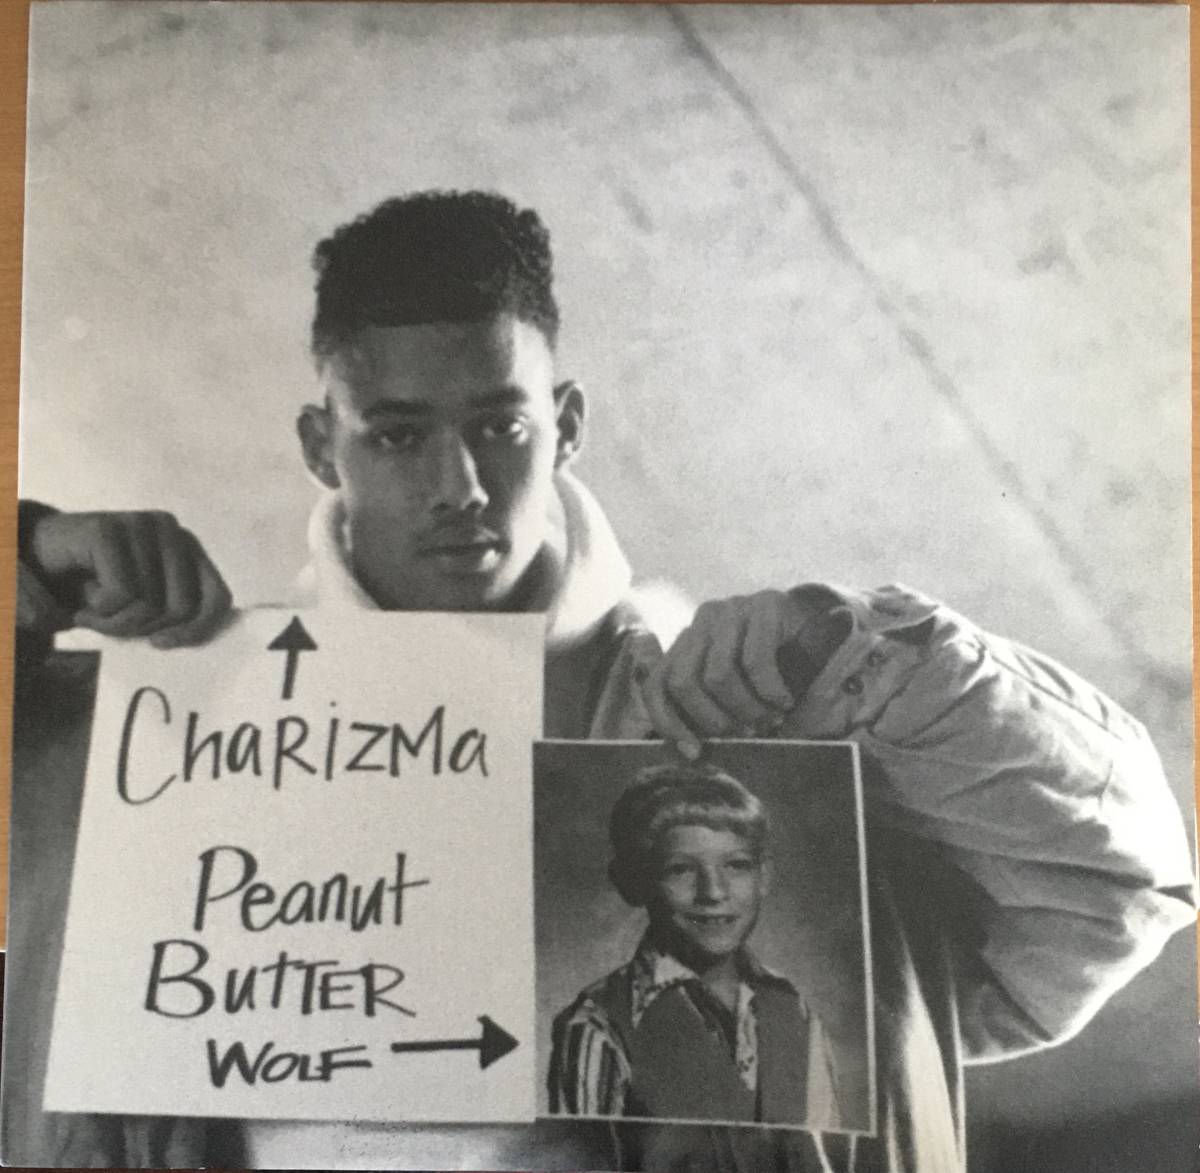 【2LP】Charizma Peanut Butter Wolf Big Shots madlib jdilla muro kiyo koco_画像1